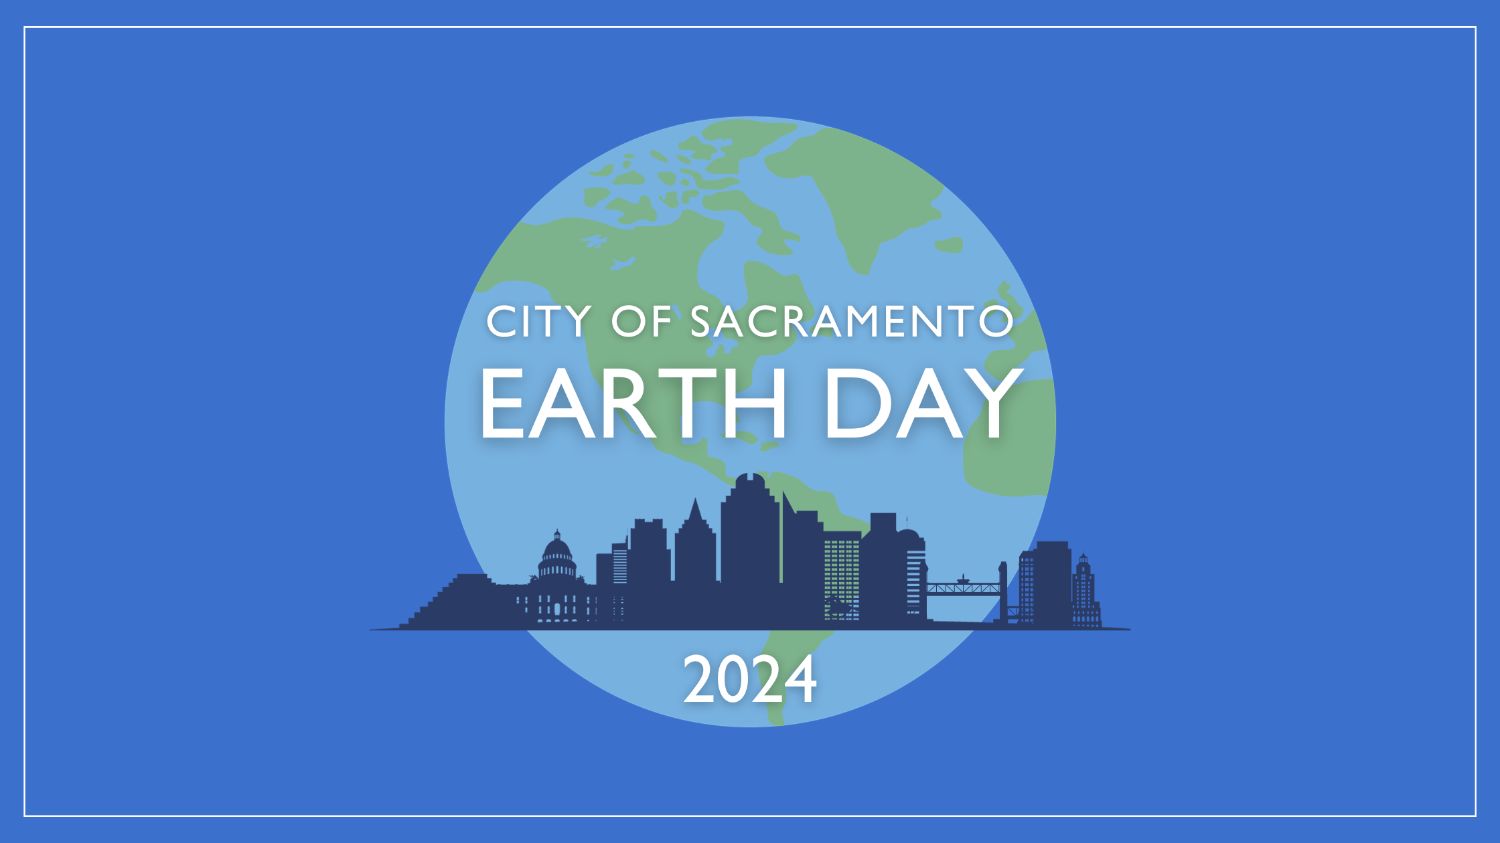 City of Sacramento Earth Day 2024 graphic with a profile of Sacramento building landmarks over an earth